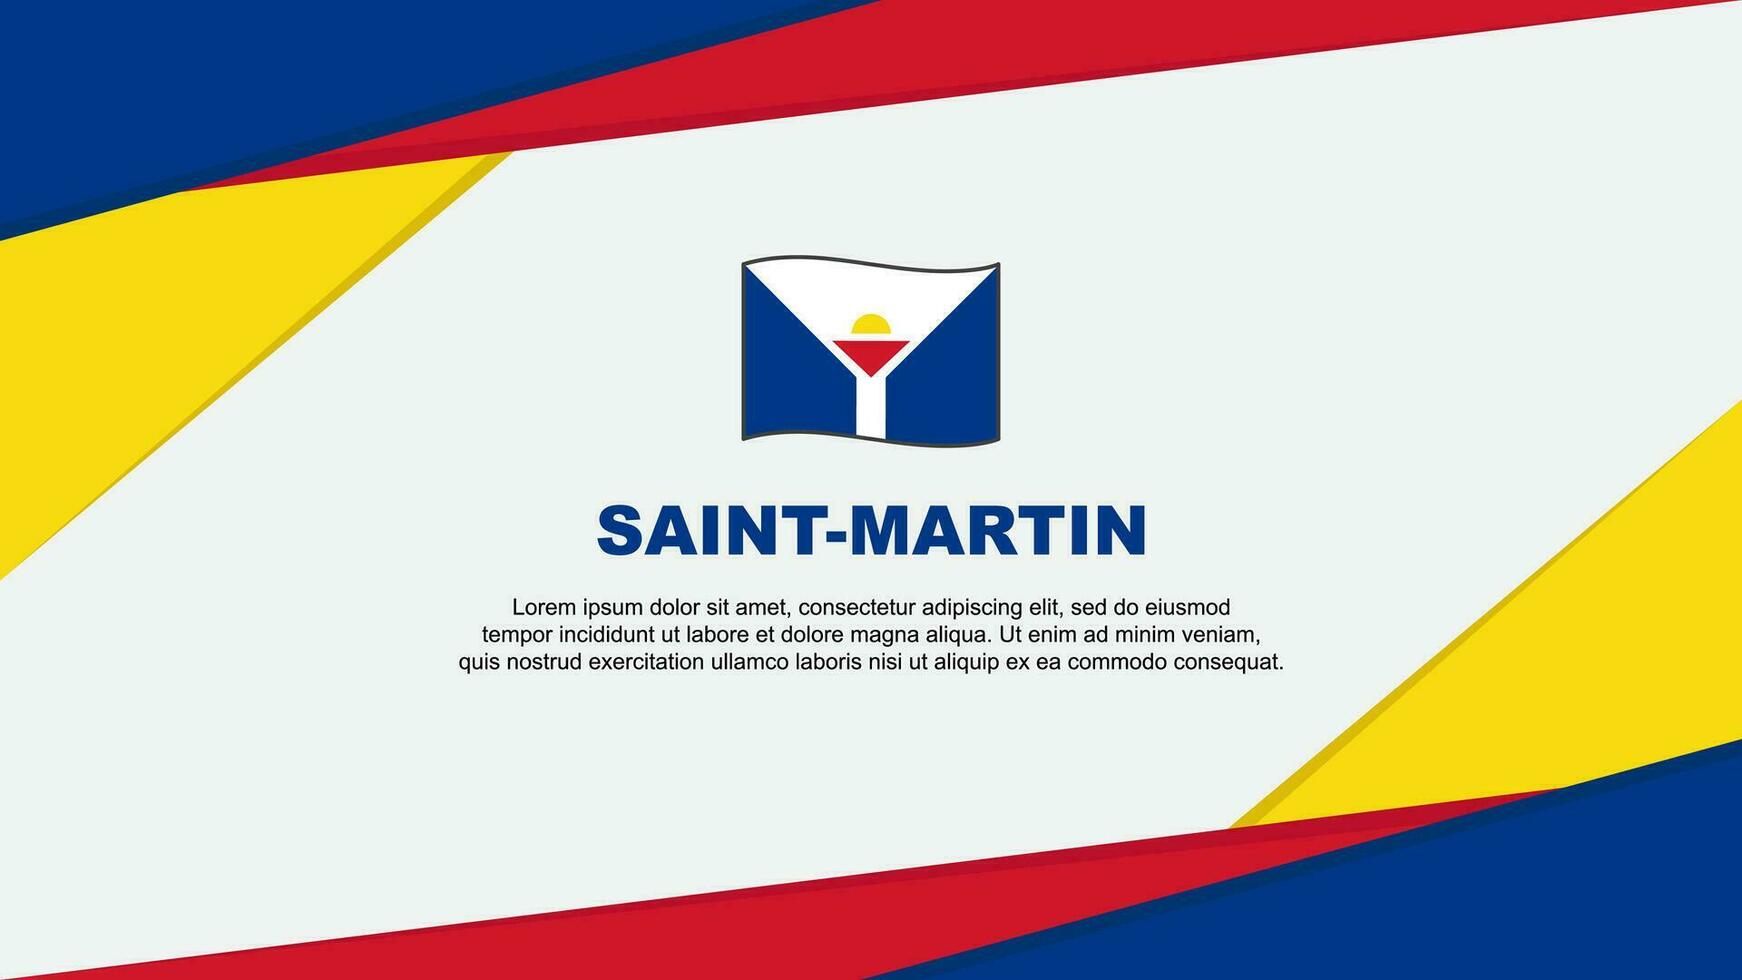 Saint Martin Flag Abstract Background Design Template. Saint Martin Independence Day Banner Cartoon Vector Illustration. Saint Martin